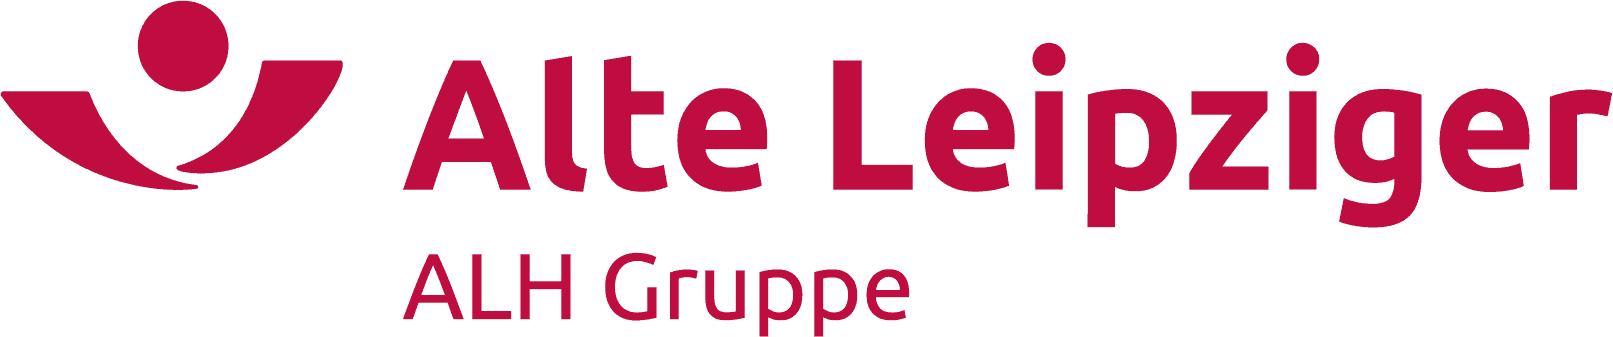 Alte Leipziger Logo